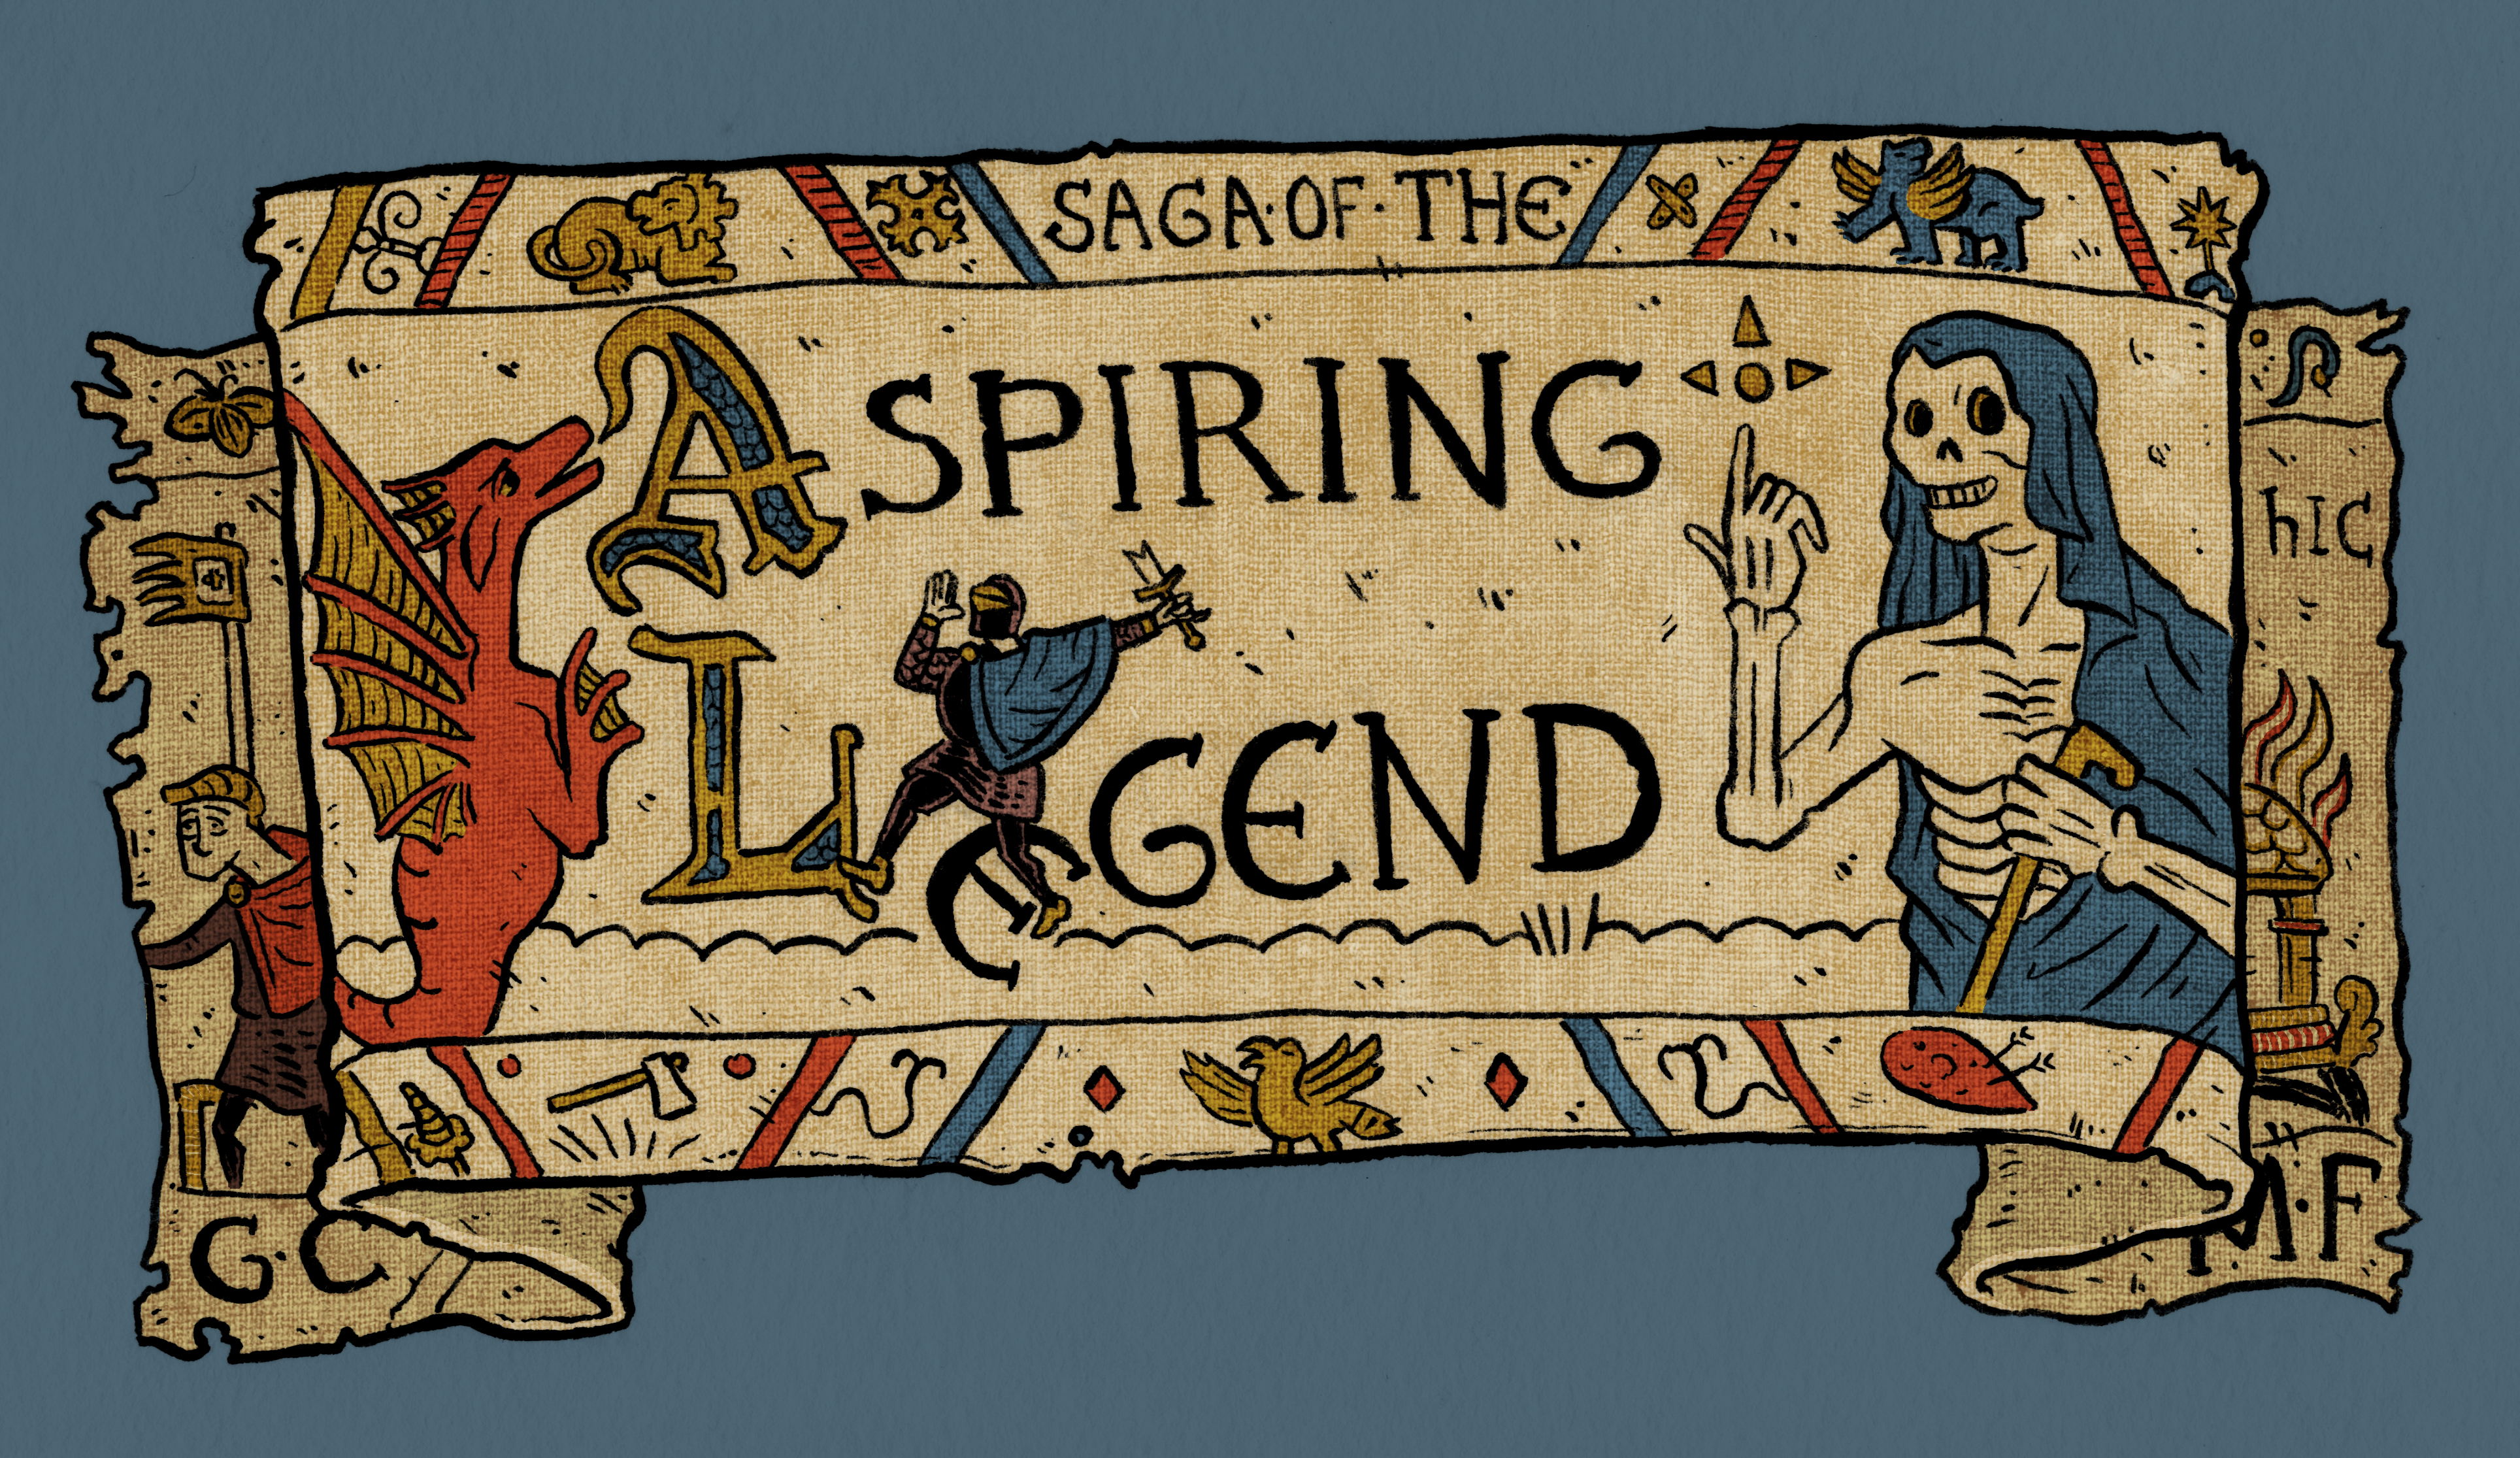 logo – Saga of the Aspiring Legend